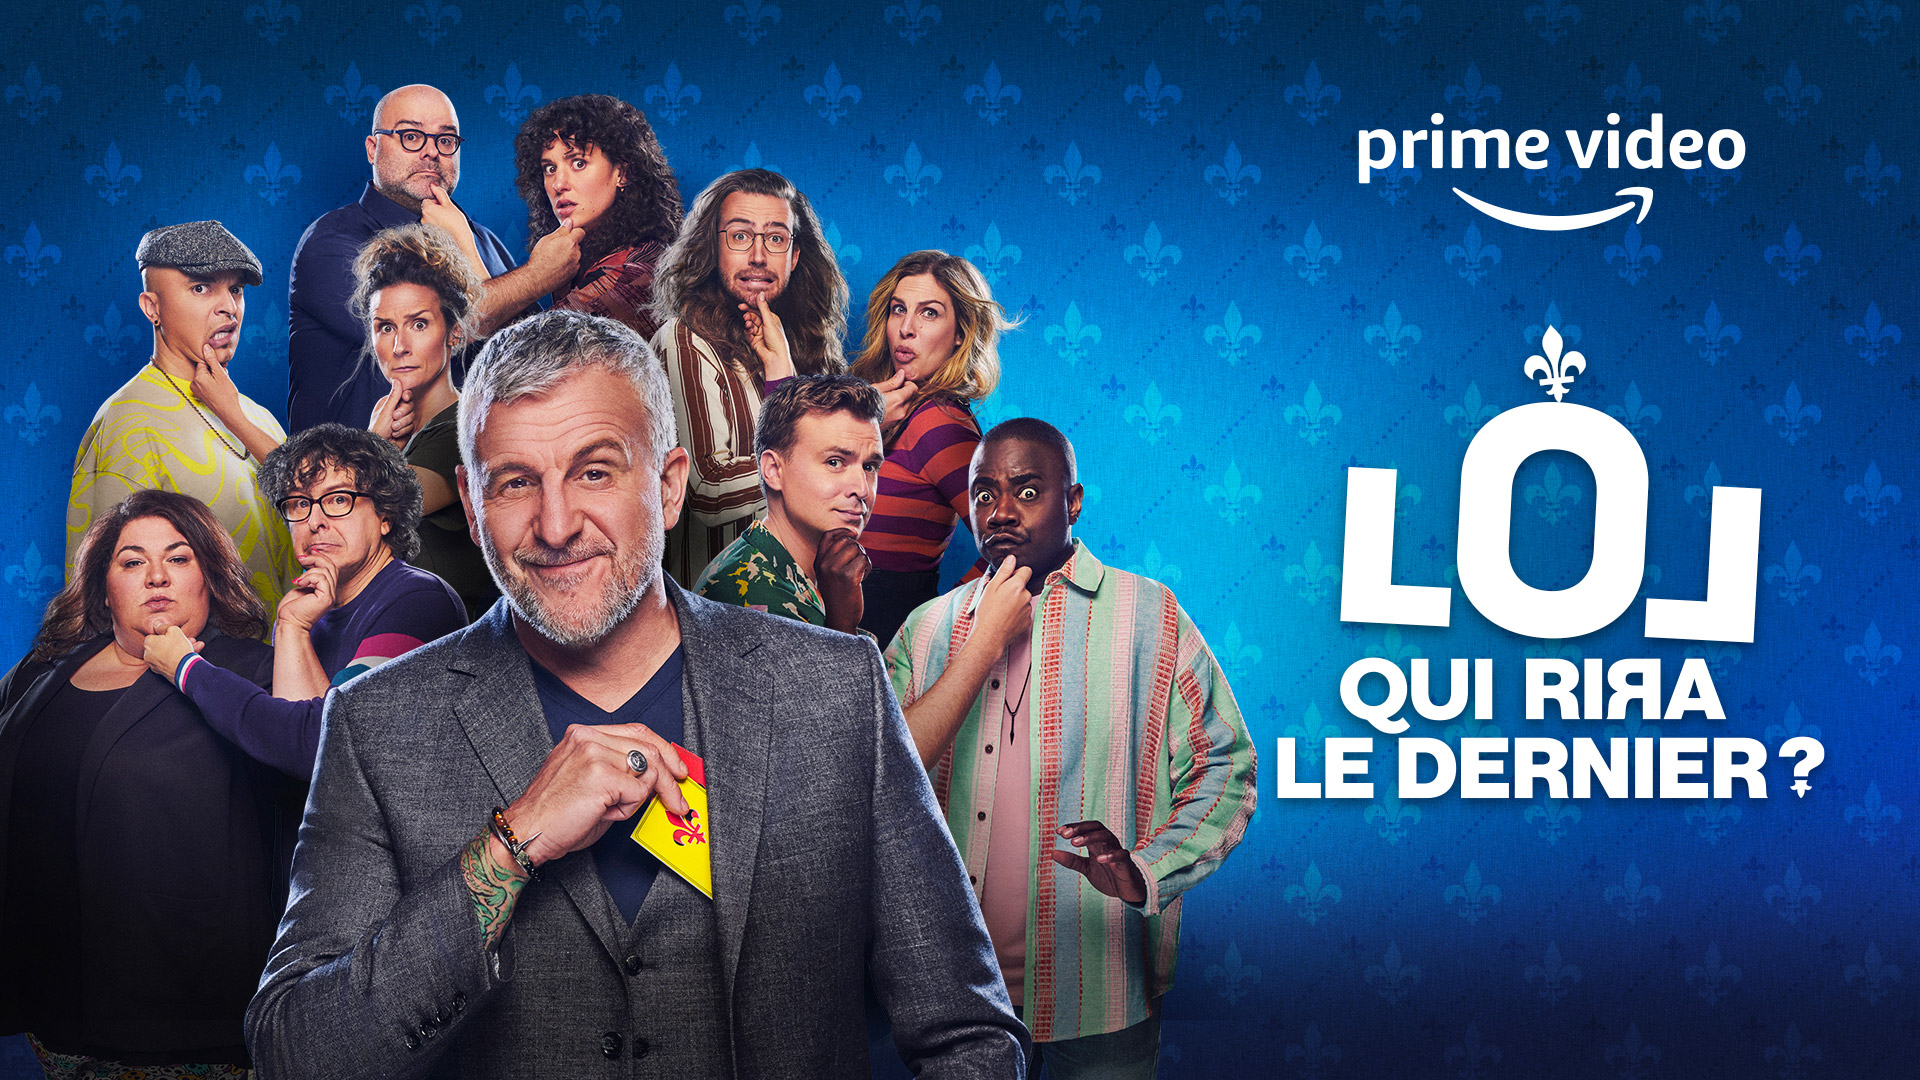 It’s No Laughing Matter! Prime Video Announces All-Star Cast of Comedian Competitors for LOL: Qui Rira Le Dernier?